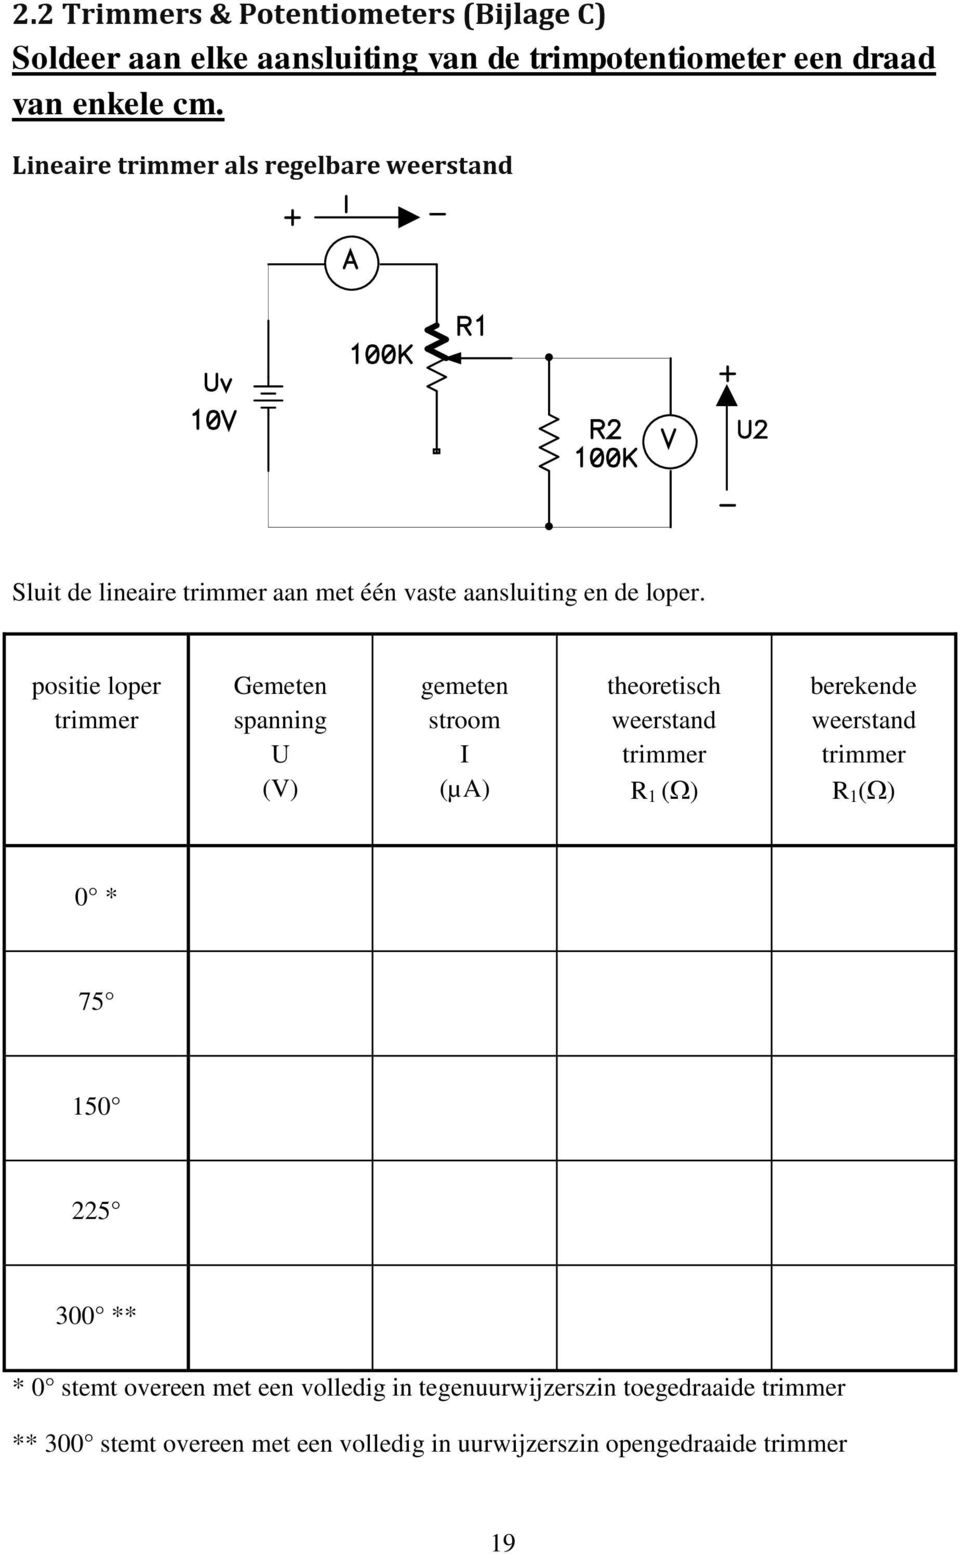 positie loper trimmer Gemeten spanning U (V) gemeten stroom I (µa) theoretisch weerstand trimmer R 1 () berekende weerstand trimmer R 1